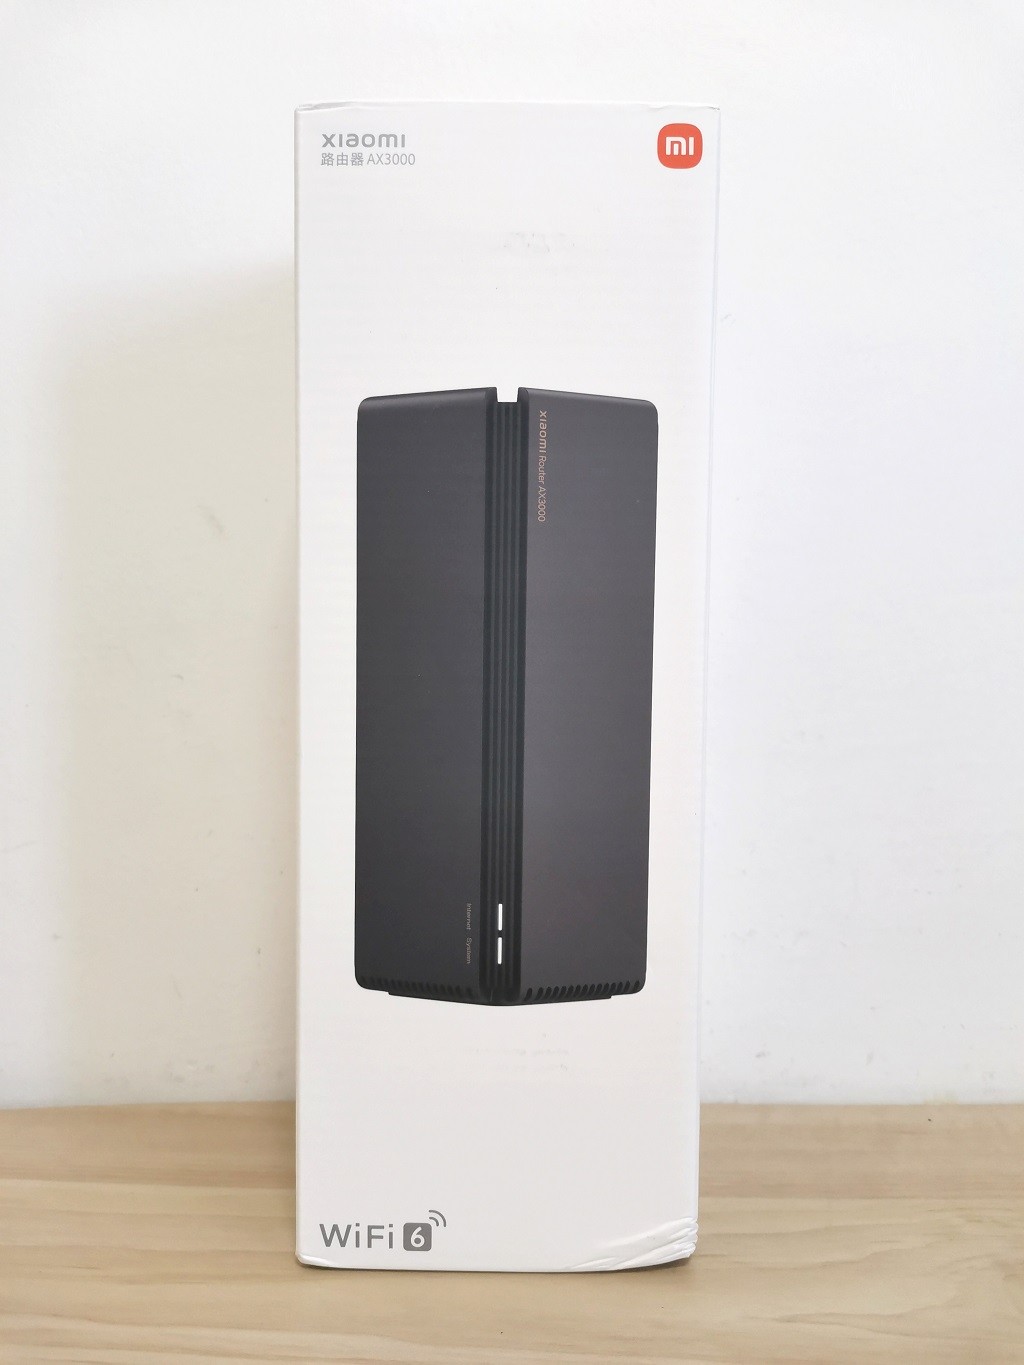 Xiaomi AX3000 Mesh Wireless Router - Full Review [Wifi 6] 